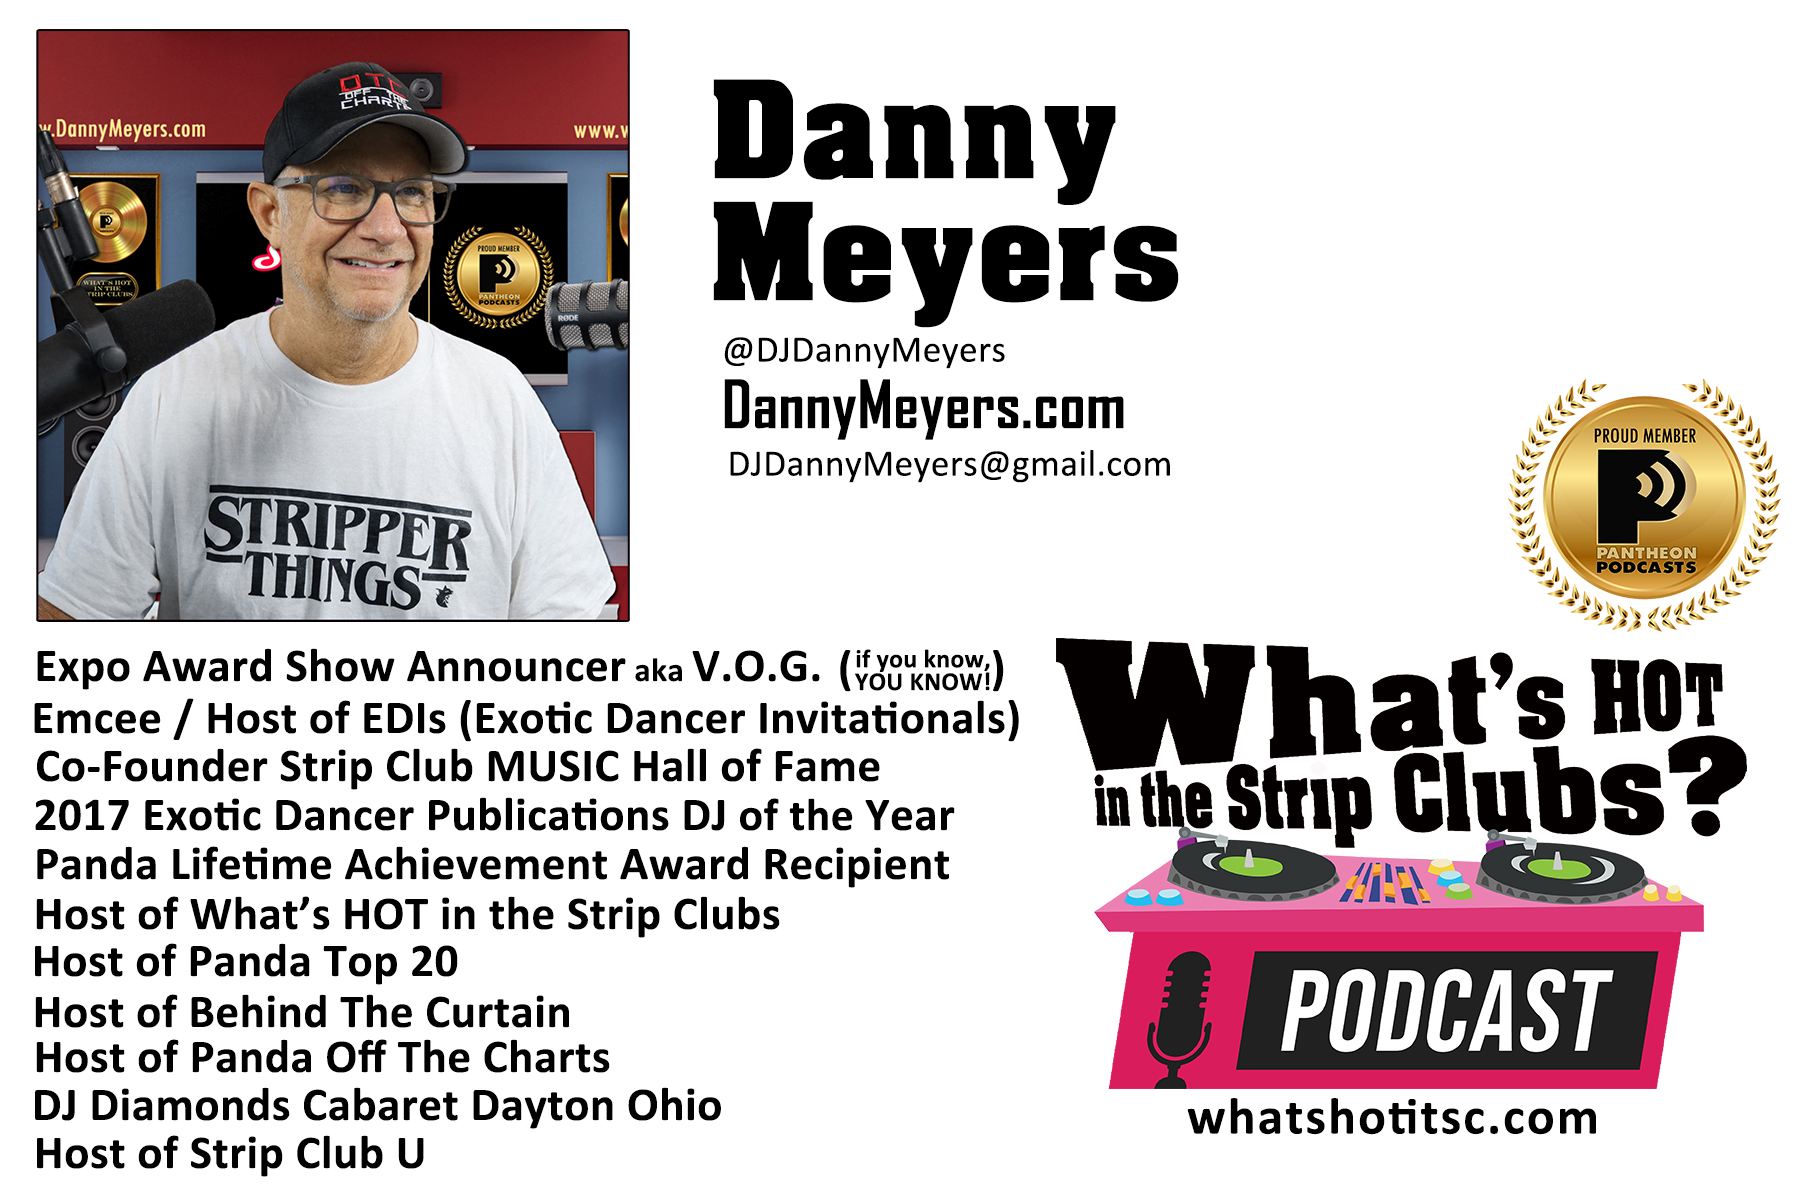 Danny Meyers